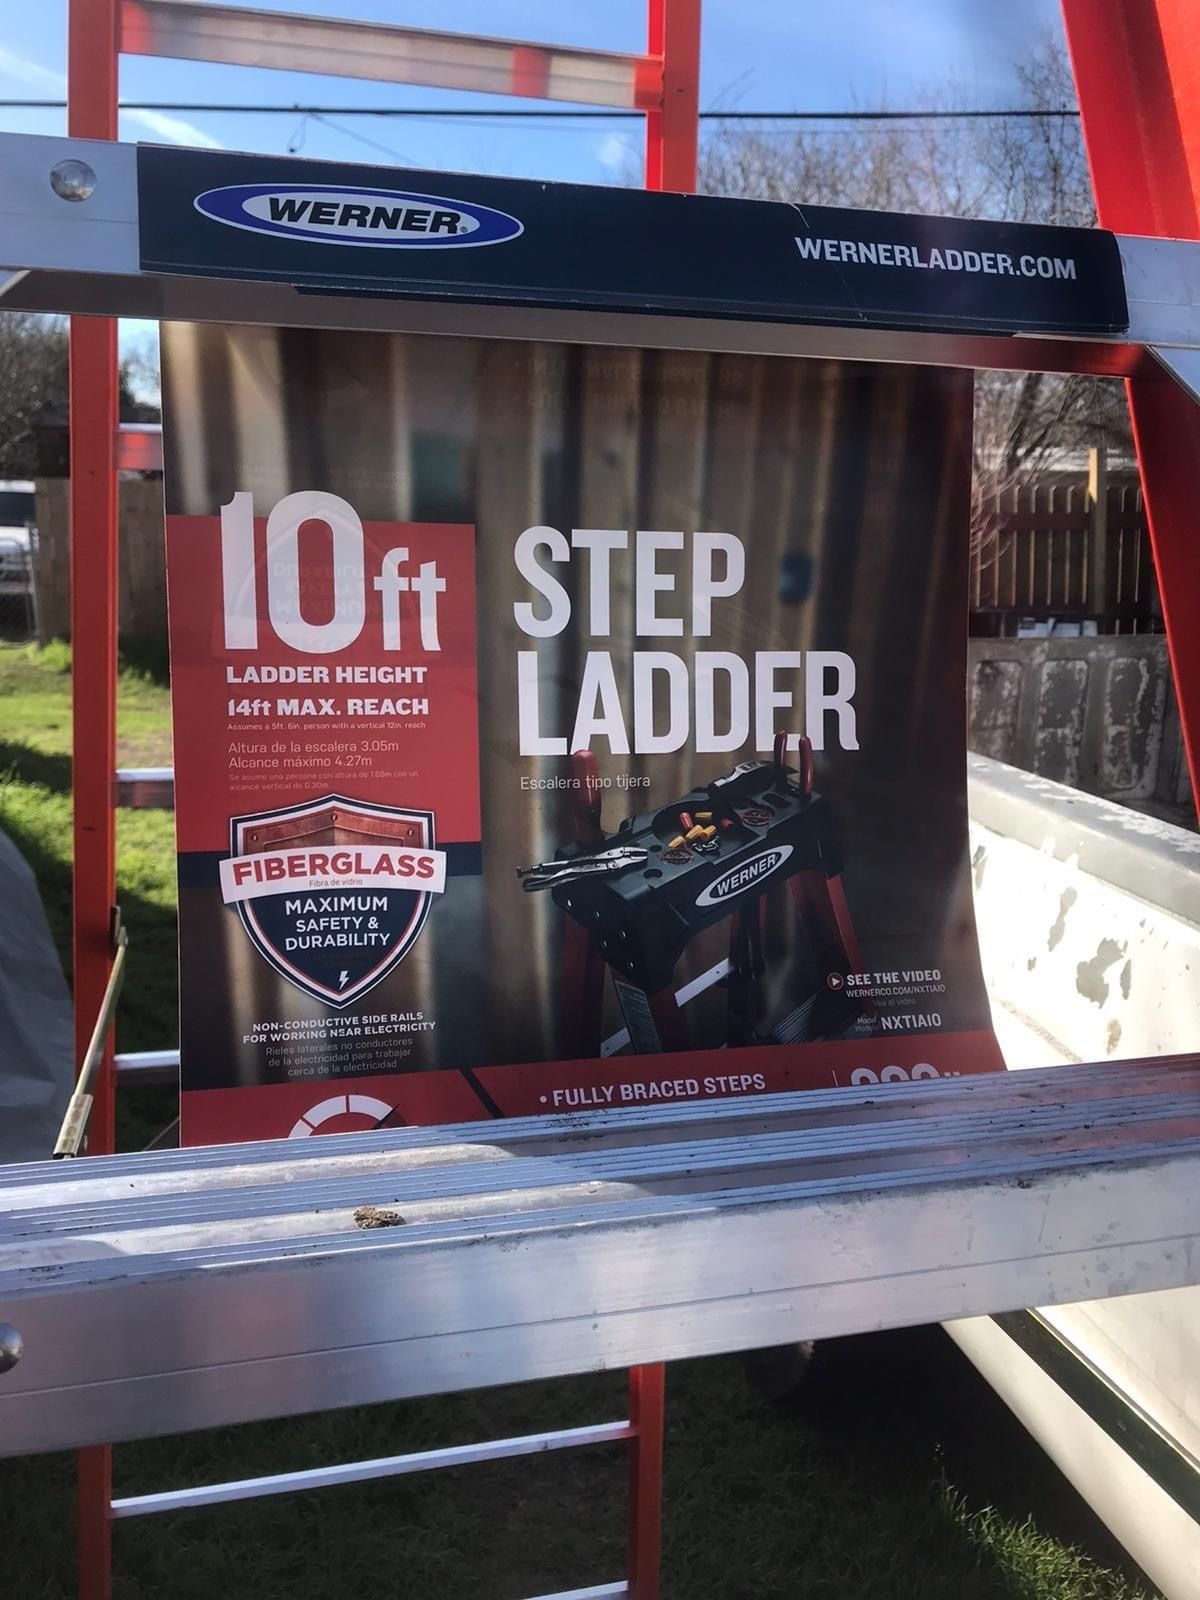 Step ladder fiberglass 10ft